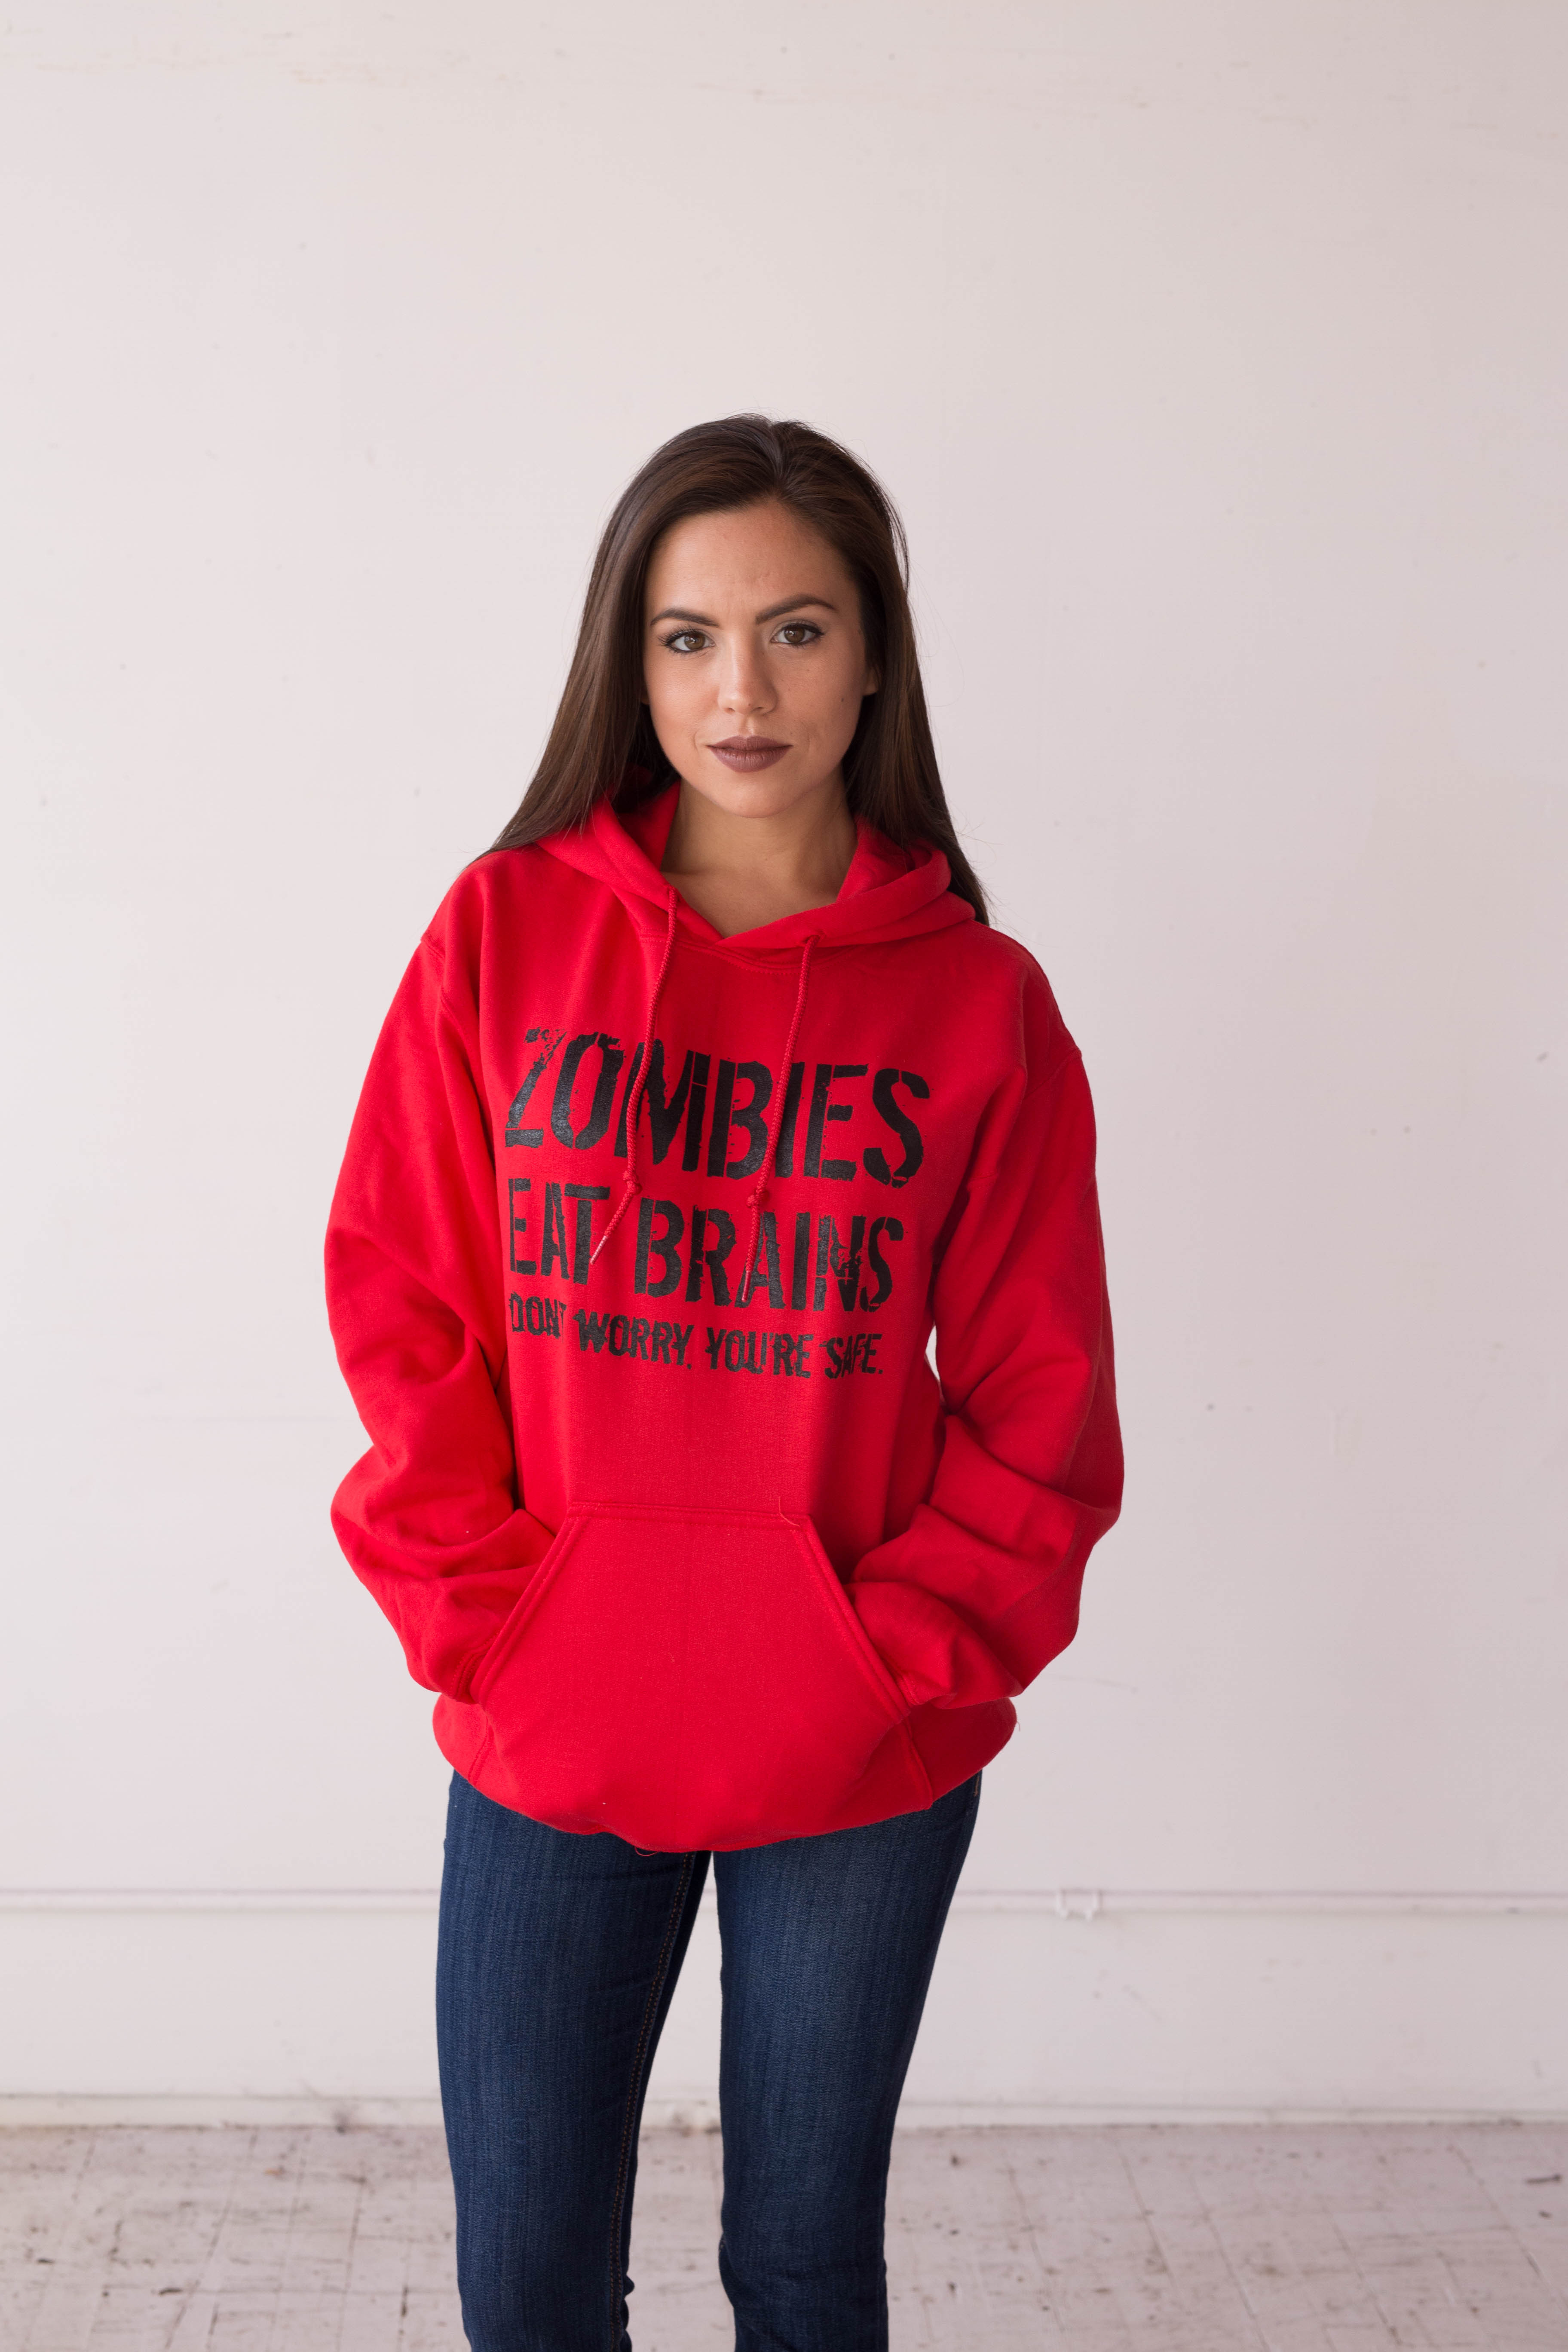 Crazy Dog Tshirts Zombies Eat Brains So Youre Safe Hoodie Funny Costume Halloween Sweatshirt